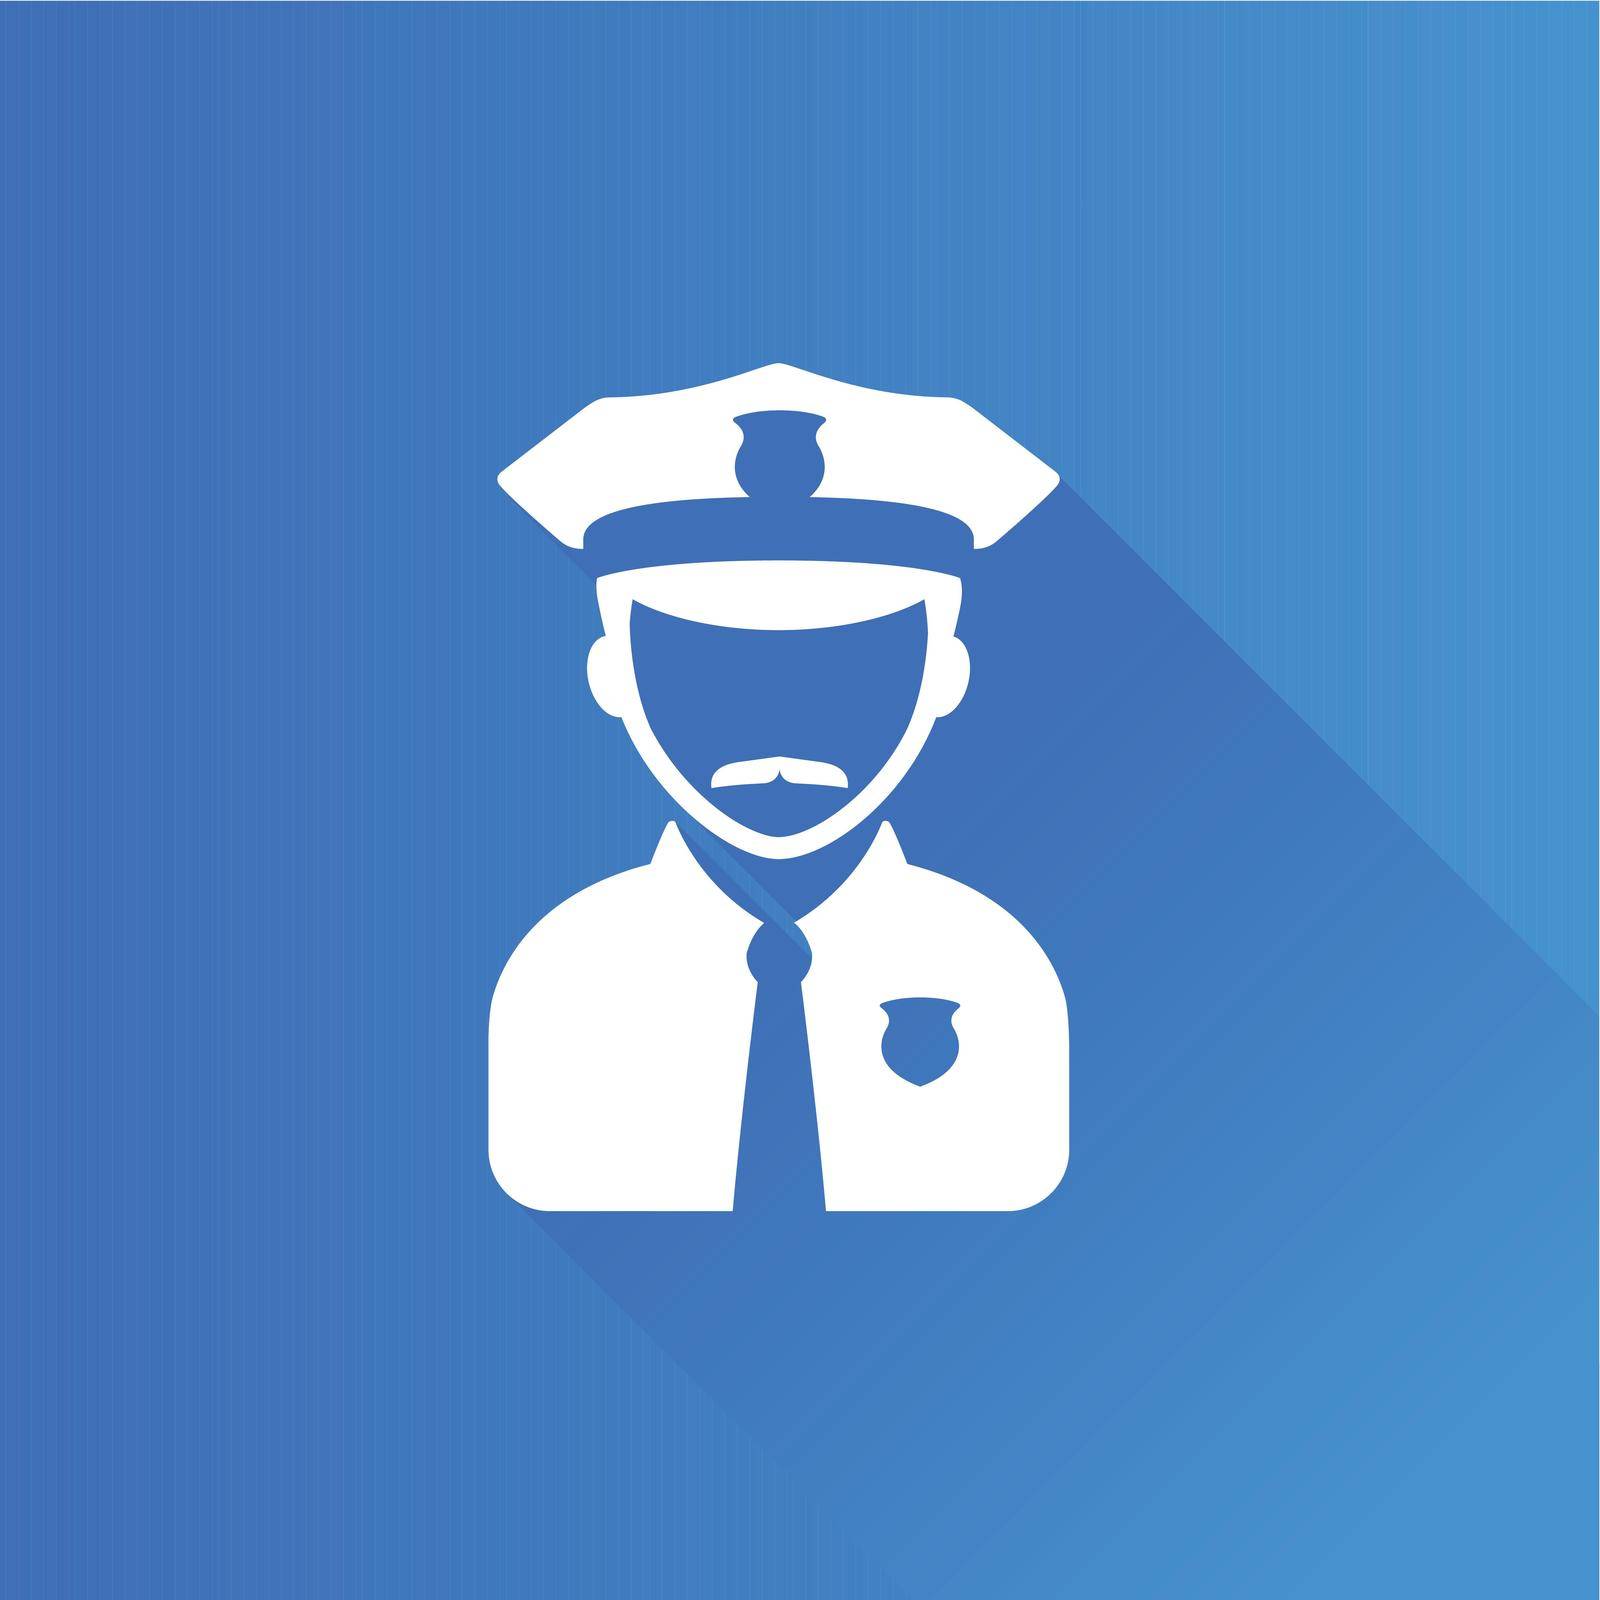 Metro Icon - Police avatar by puruan